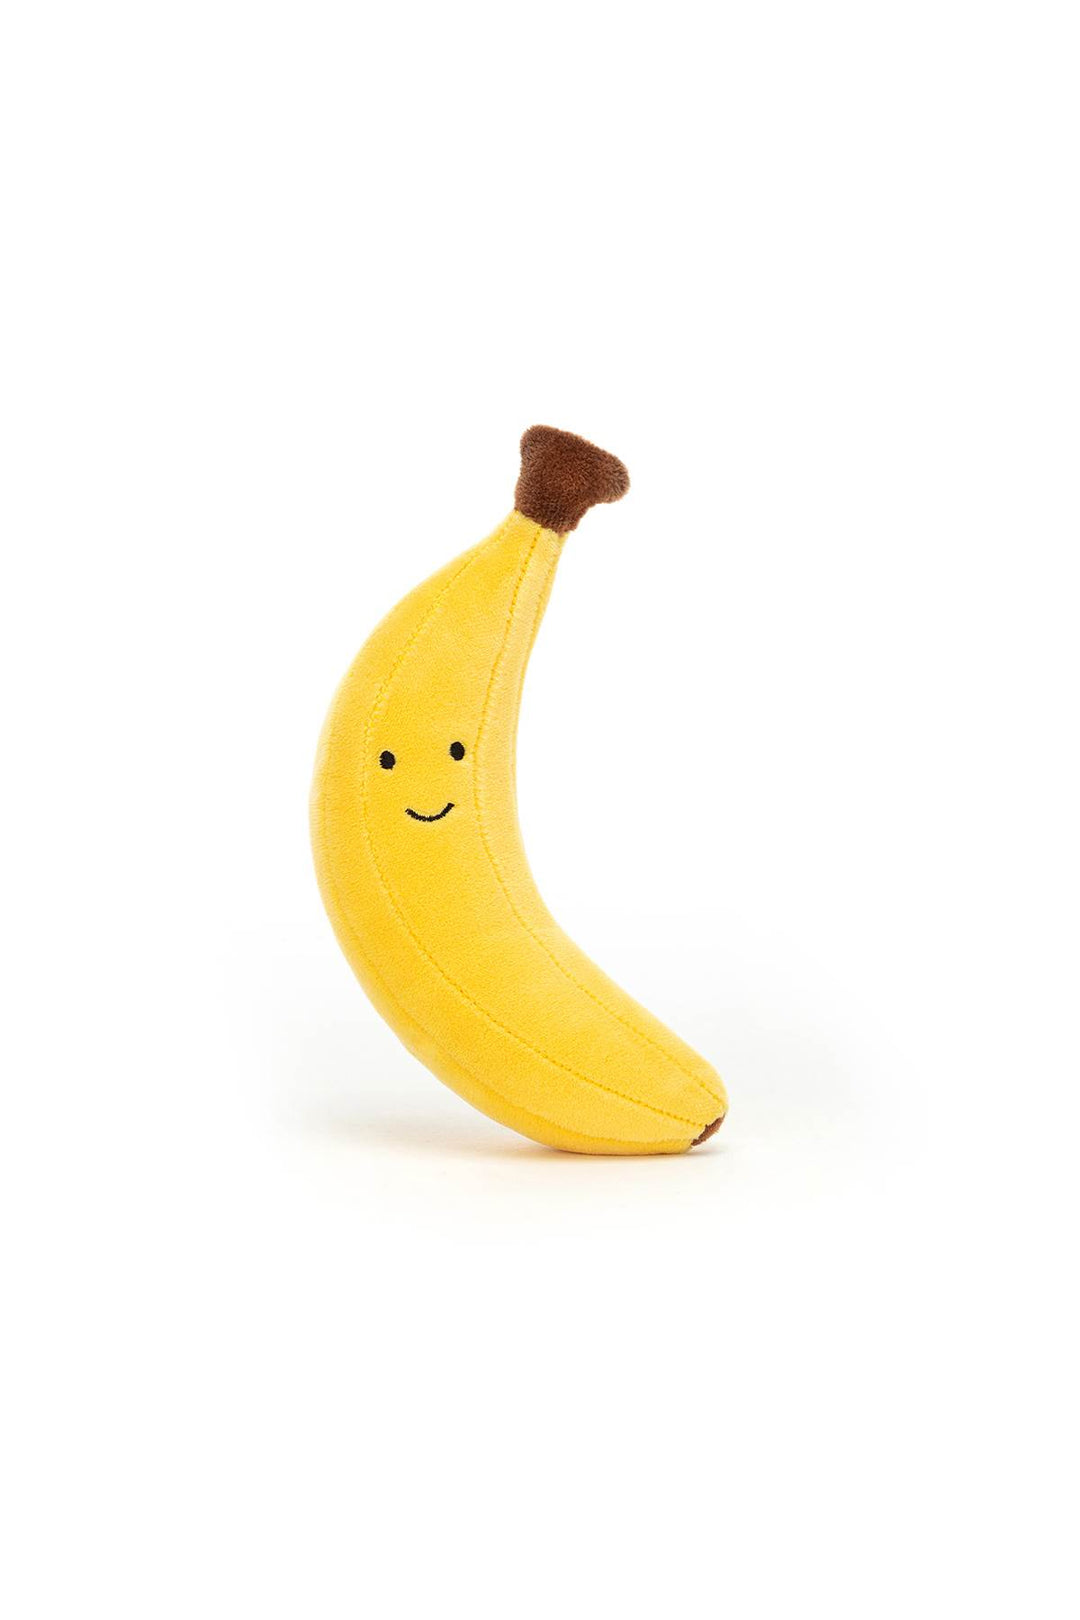 plush fabulous fruit banana-0